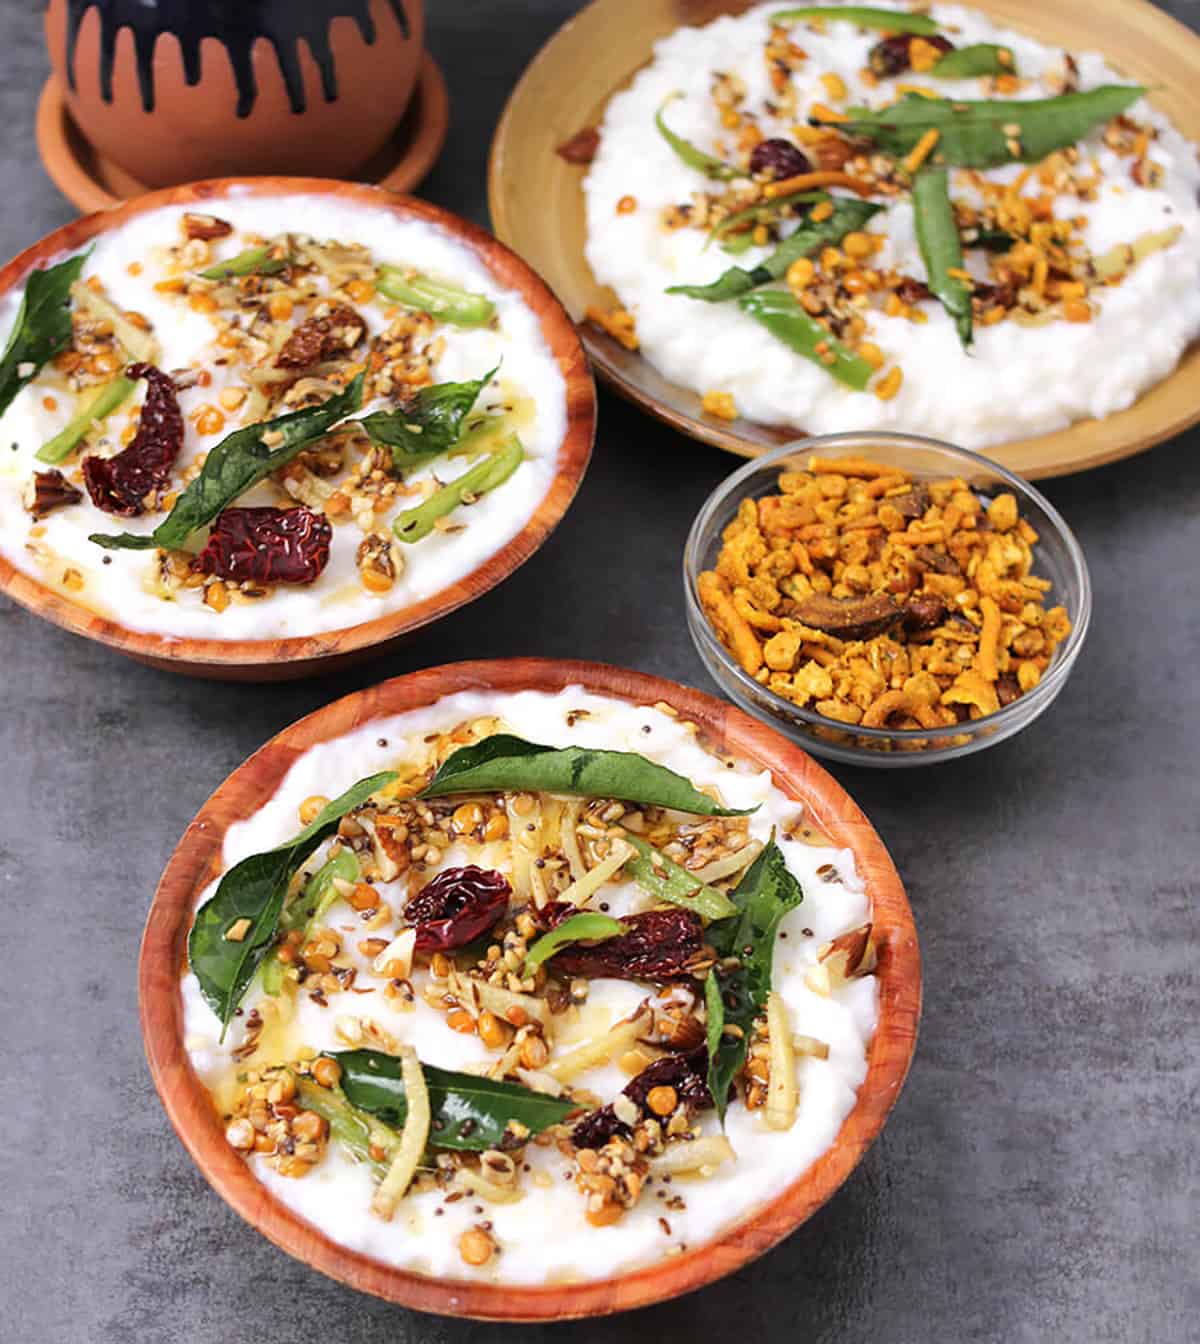 Spicy curd rice (thayir sadam or daddojanam) for a healthy low-calorie vegetarian meal in 2 bowls.